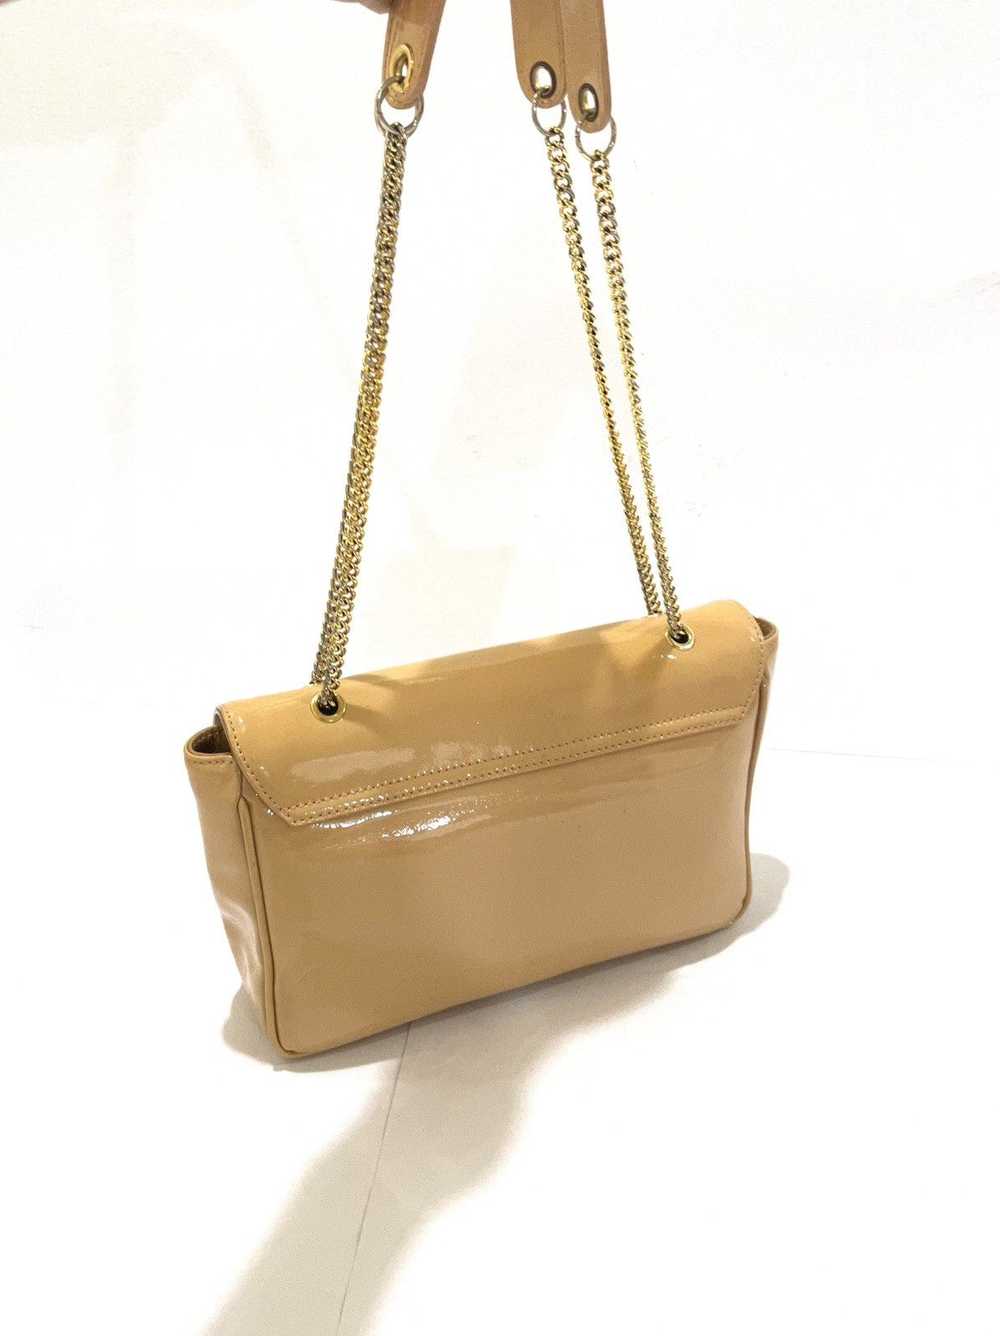 Vivienne Westwood Patent Leather Chain Flap Bag - image 8